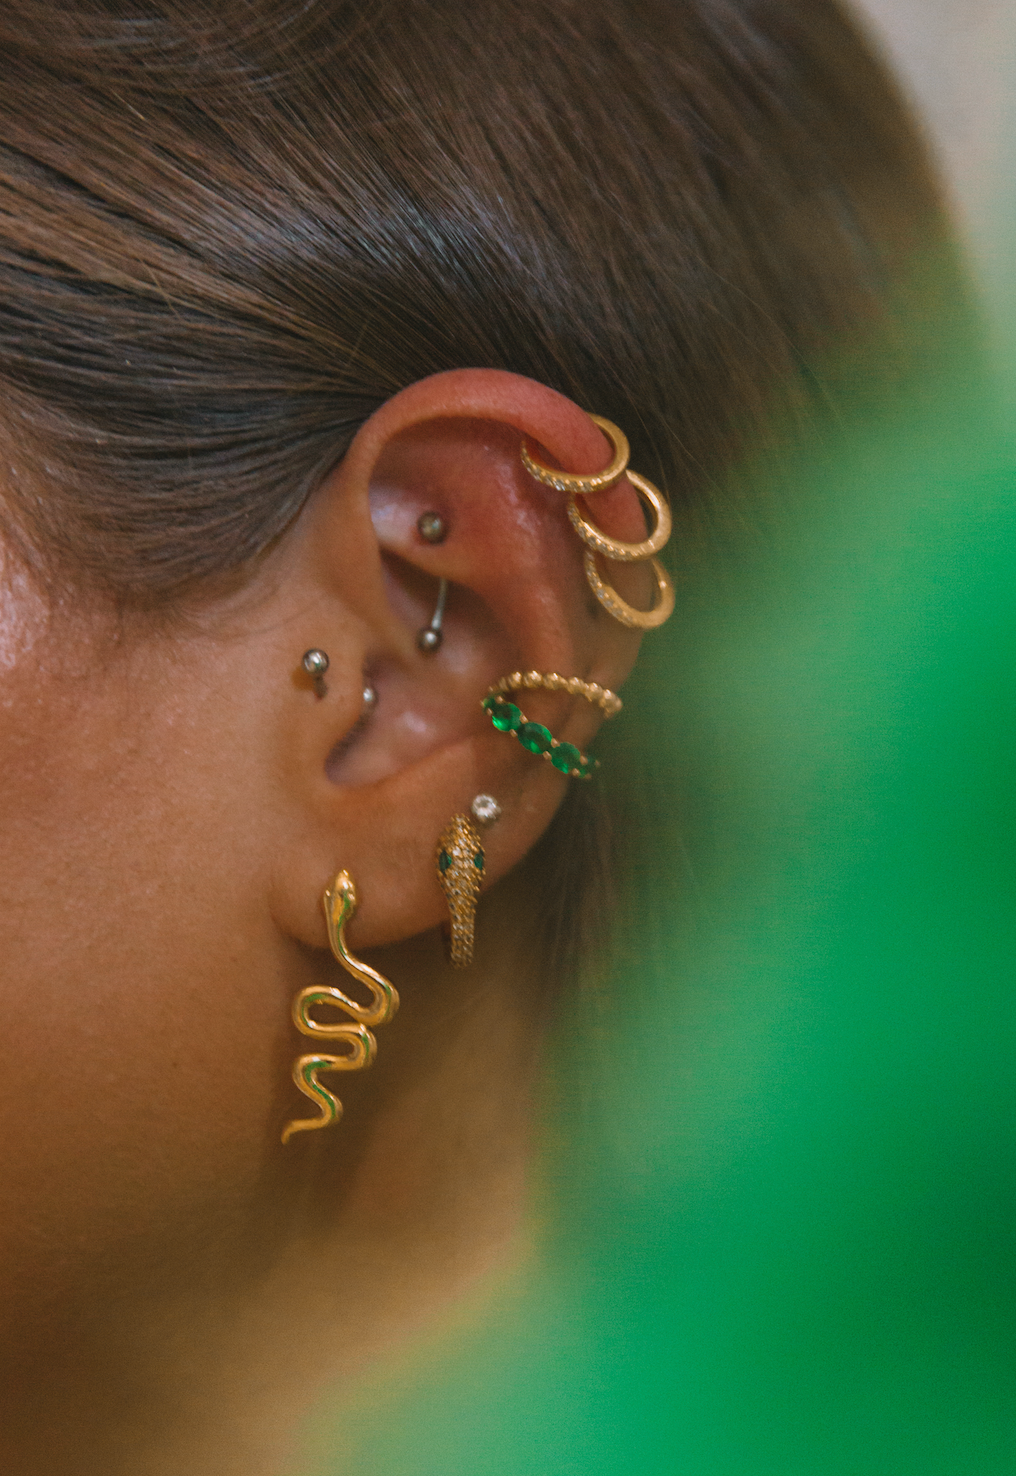 The Emerald Ear Cuff